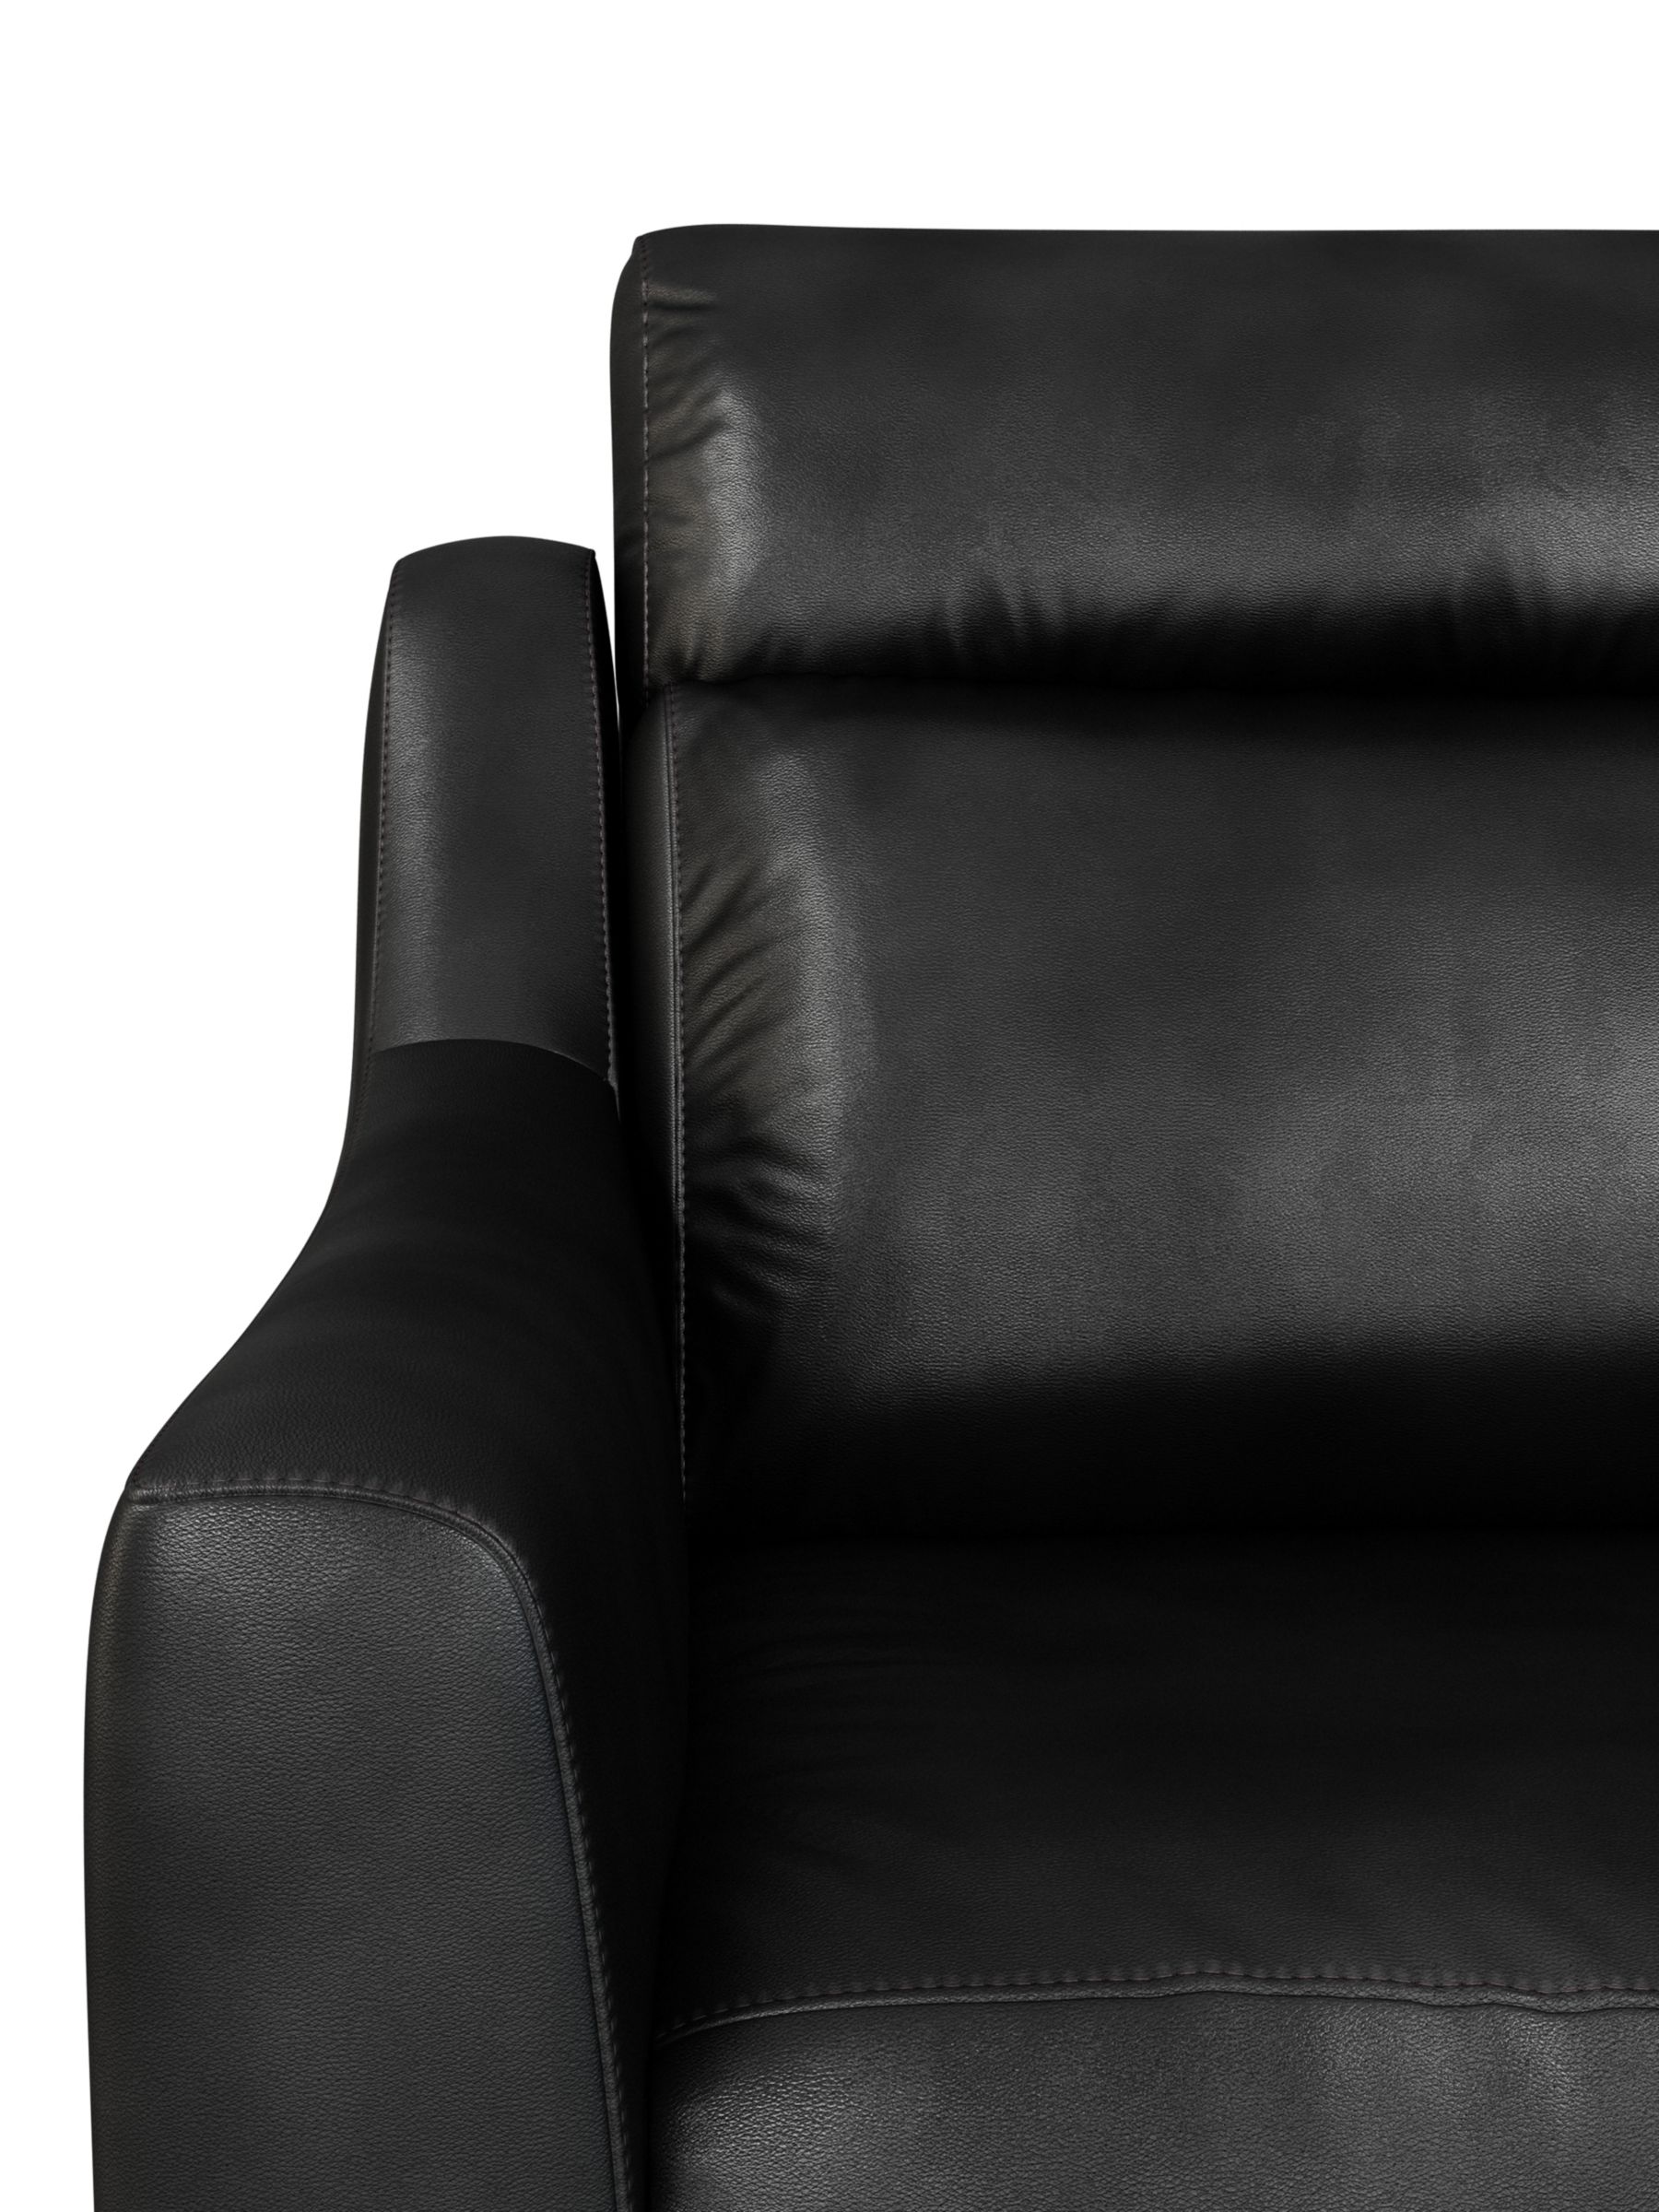 John Lewis Elevate Leather Armchair, Dark Leg